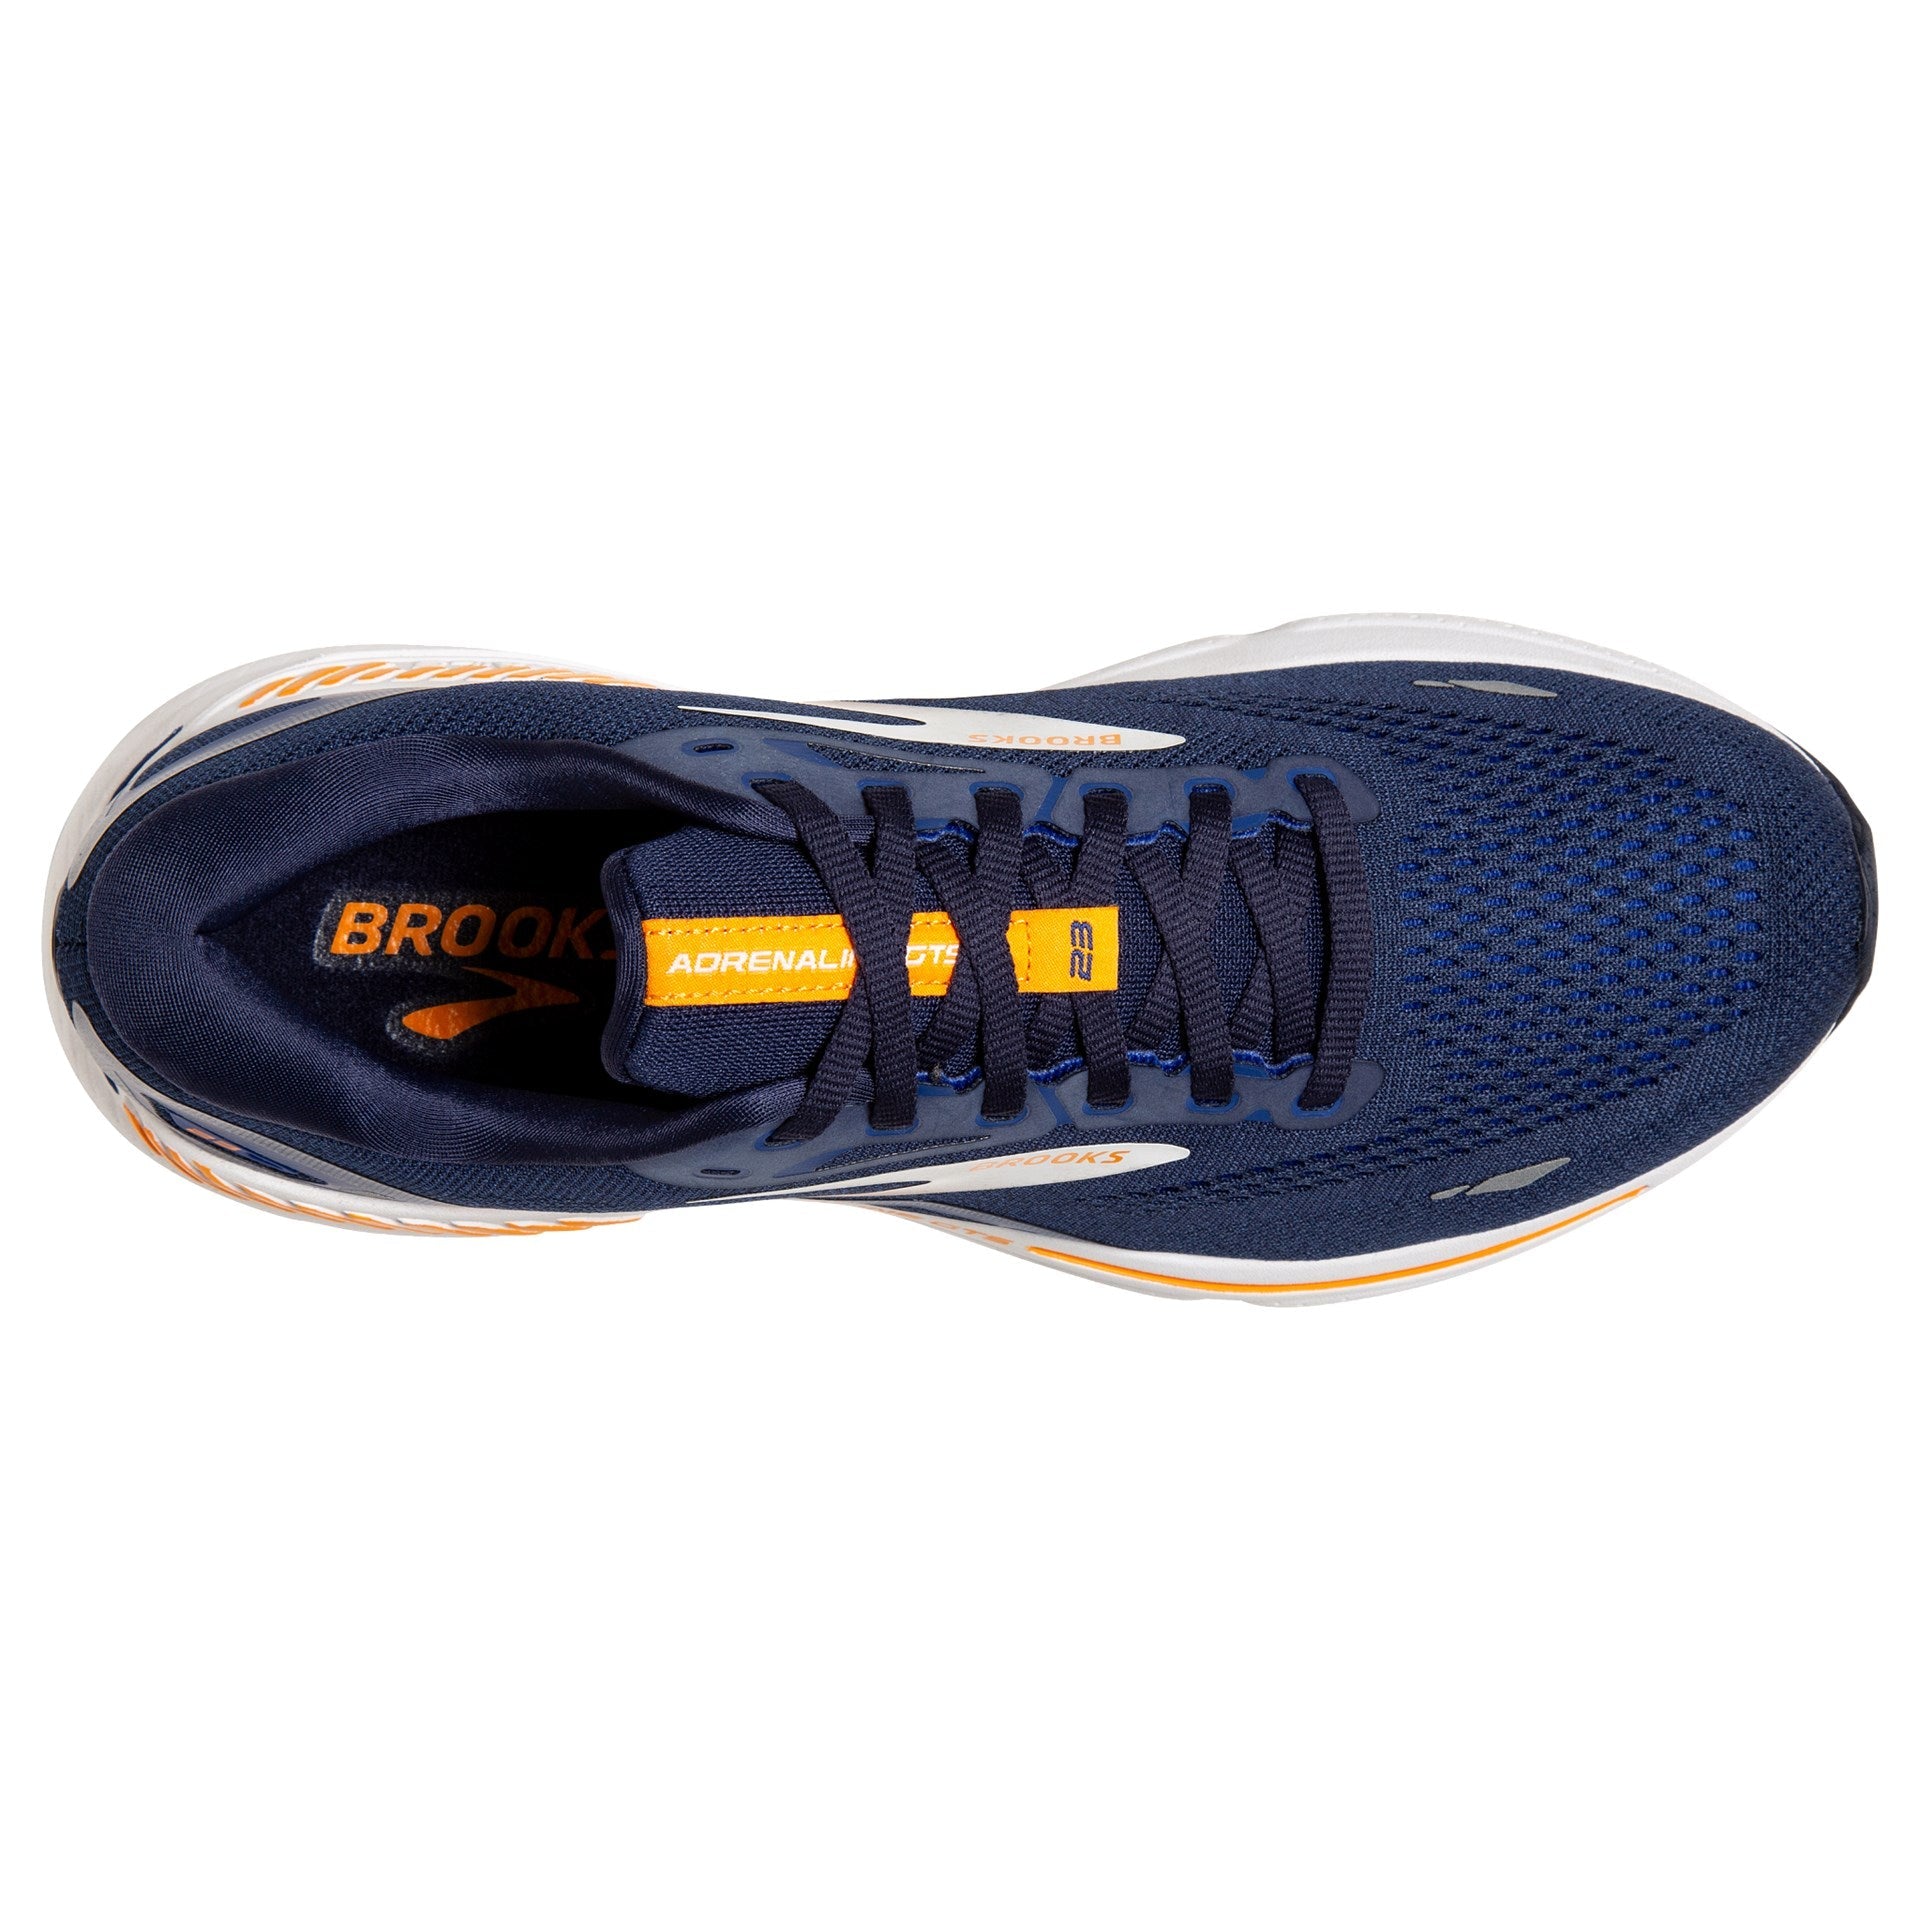 Brooks Adrenaline GTS 23 Running Shoes - Mens - Peacoat/Ultramarina/Orange